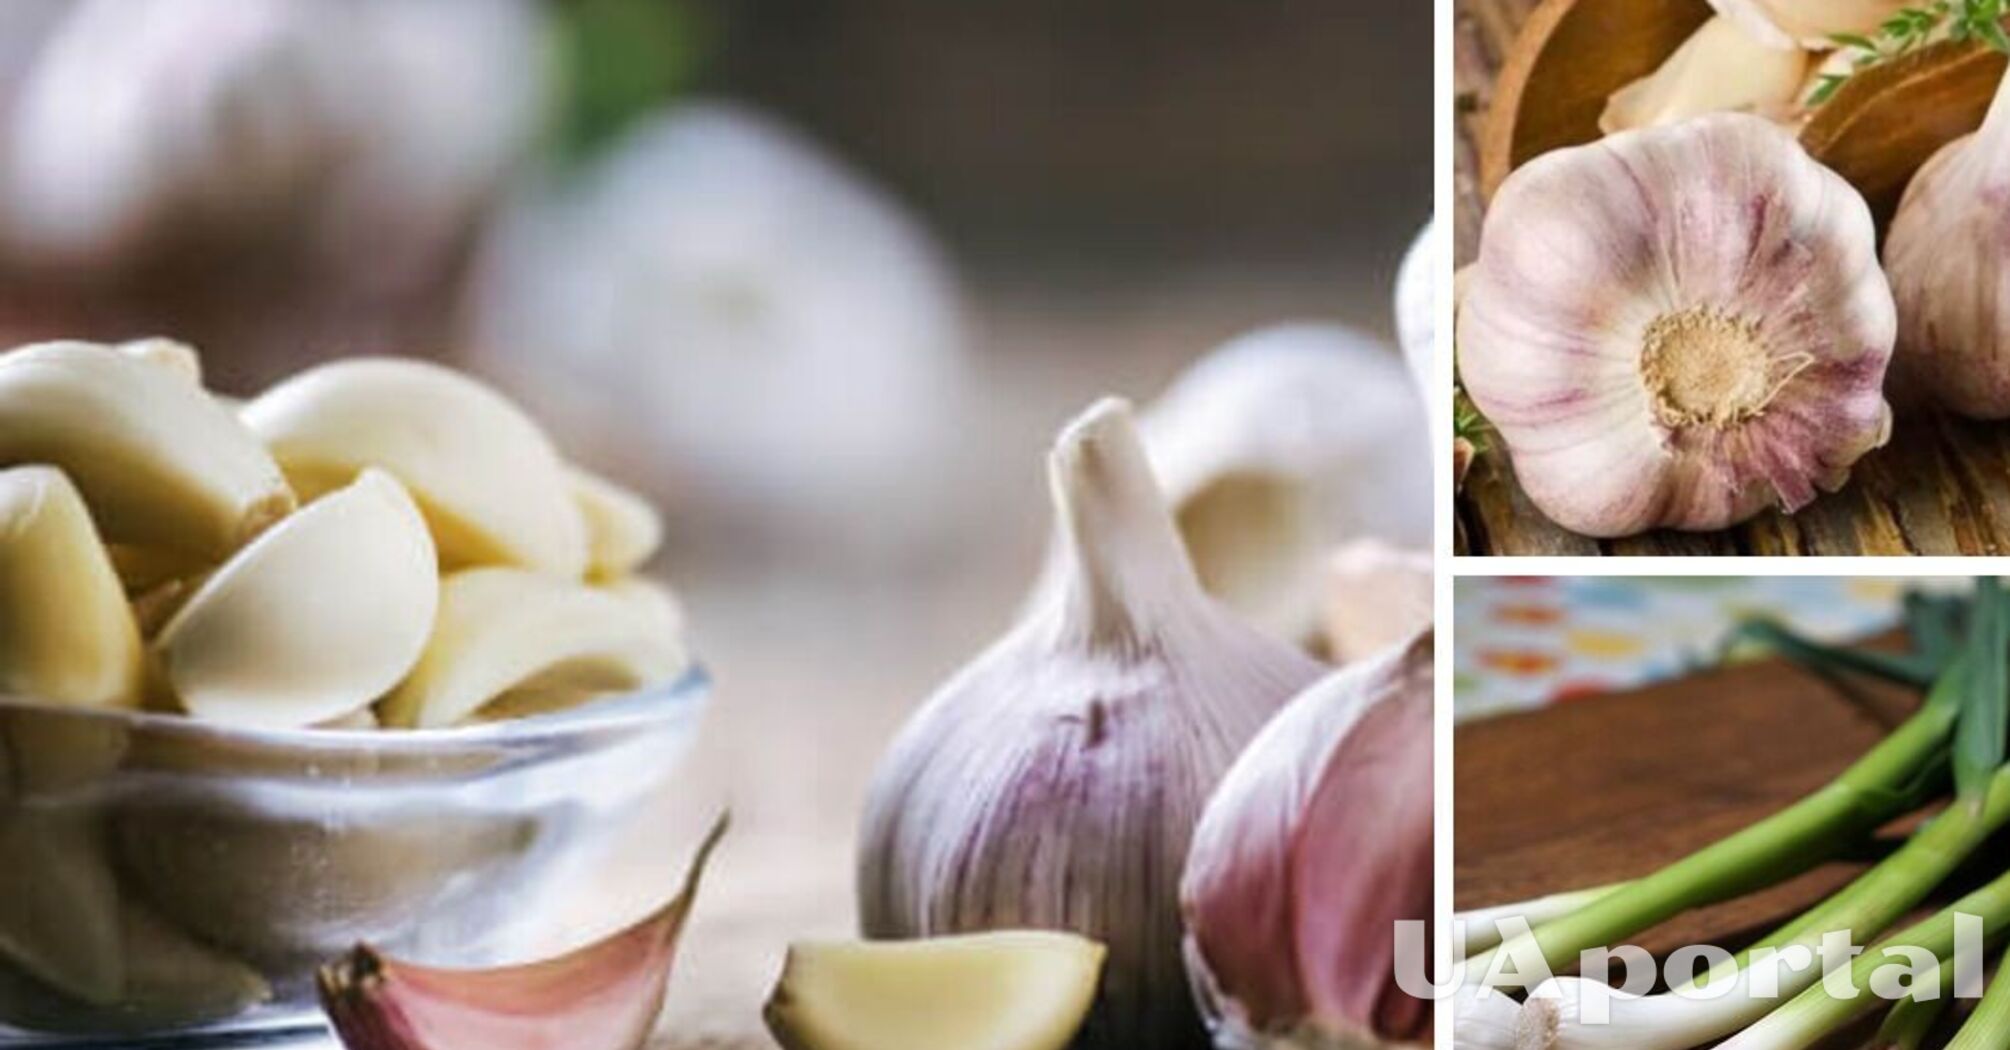 Dangerous garlic: who absolutely must not eat it